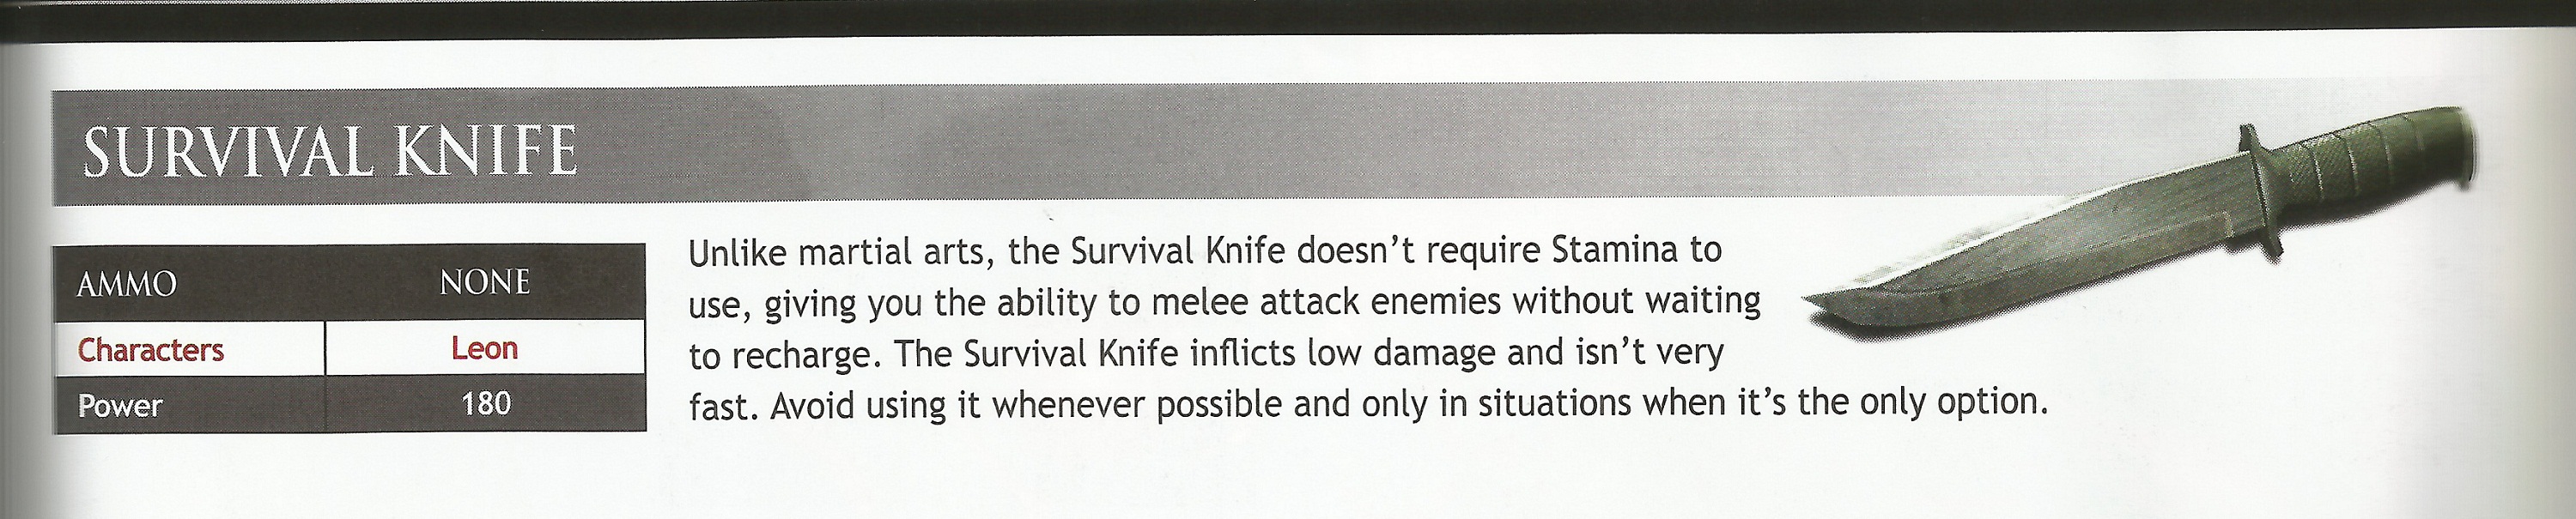 Survival Knife RE6 special edition SurvivalKnifeDescription